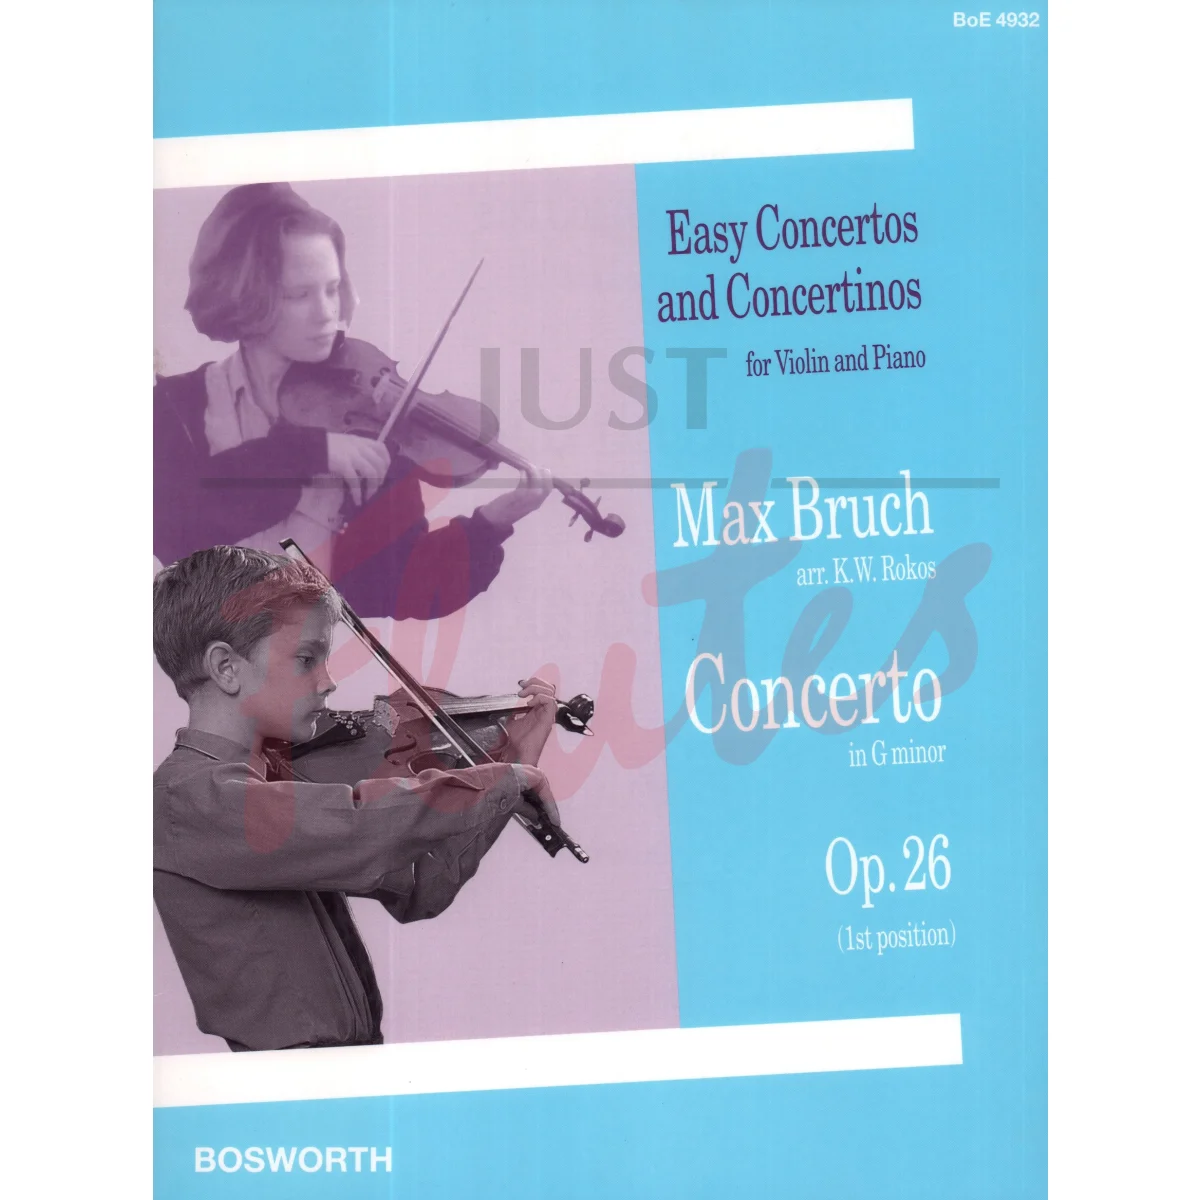 Concerto in G minor for Violin and Piano